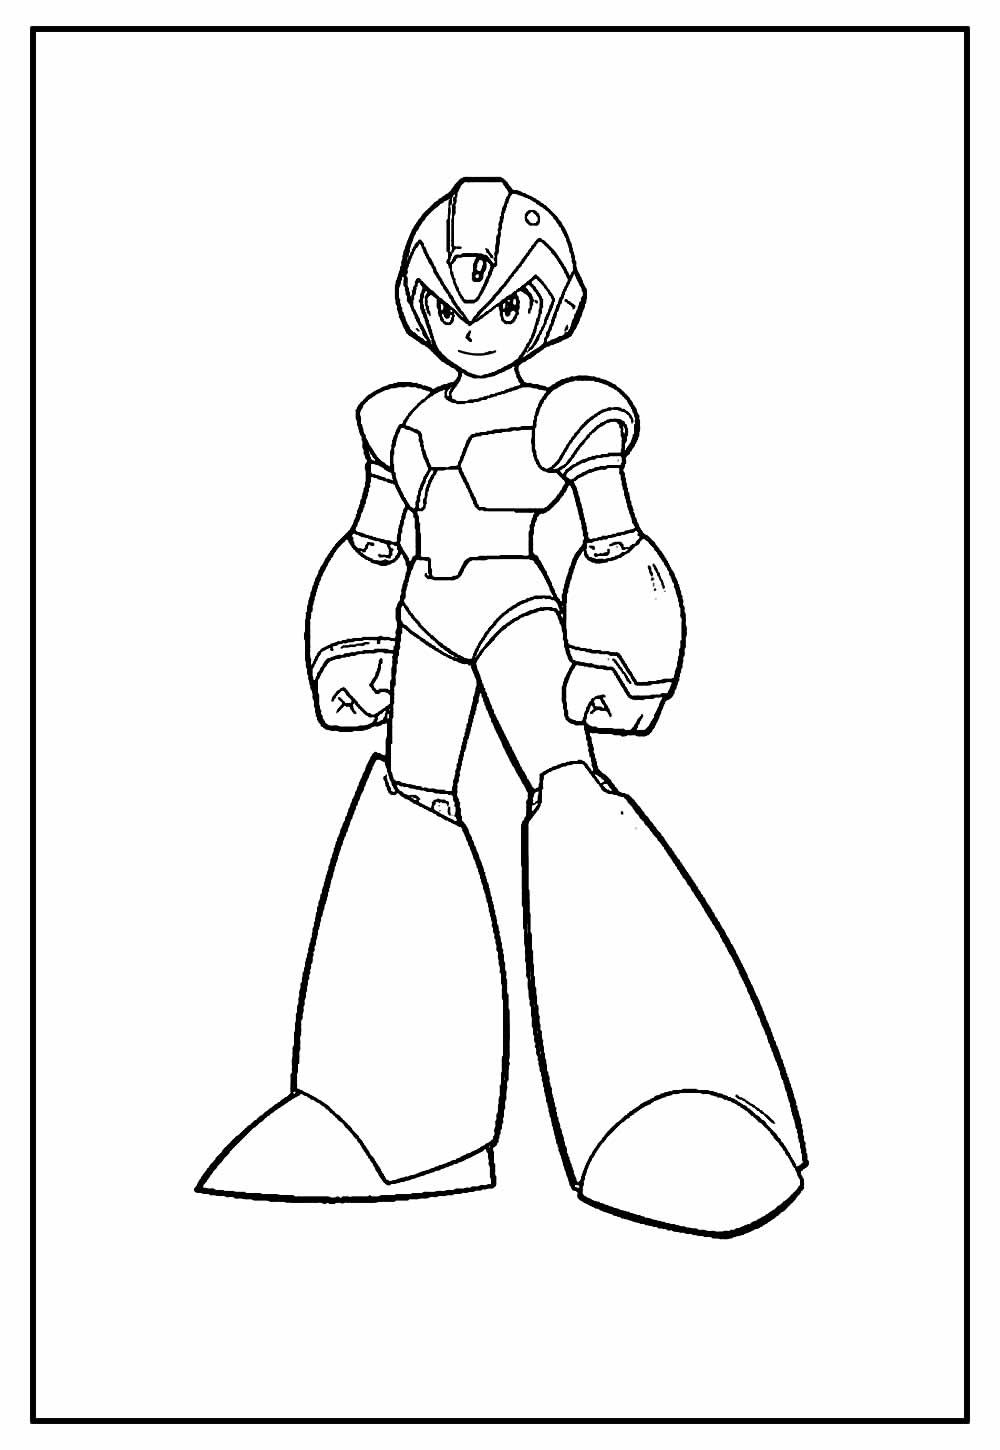 Desenho para pintar de Mega Man